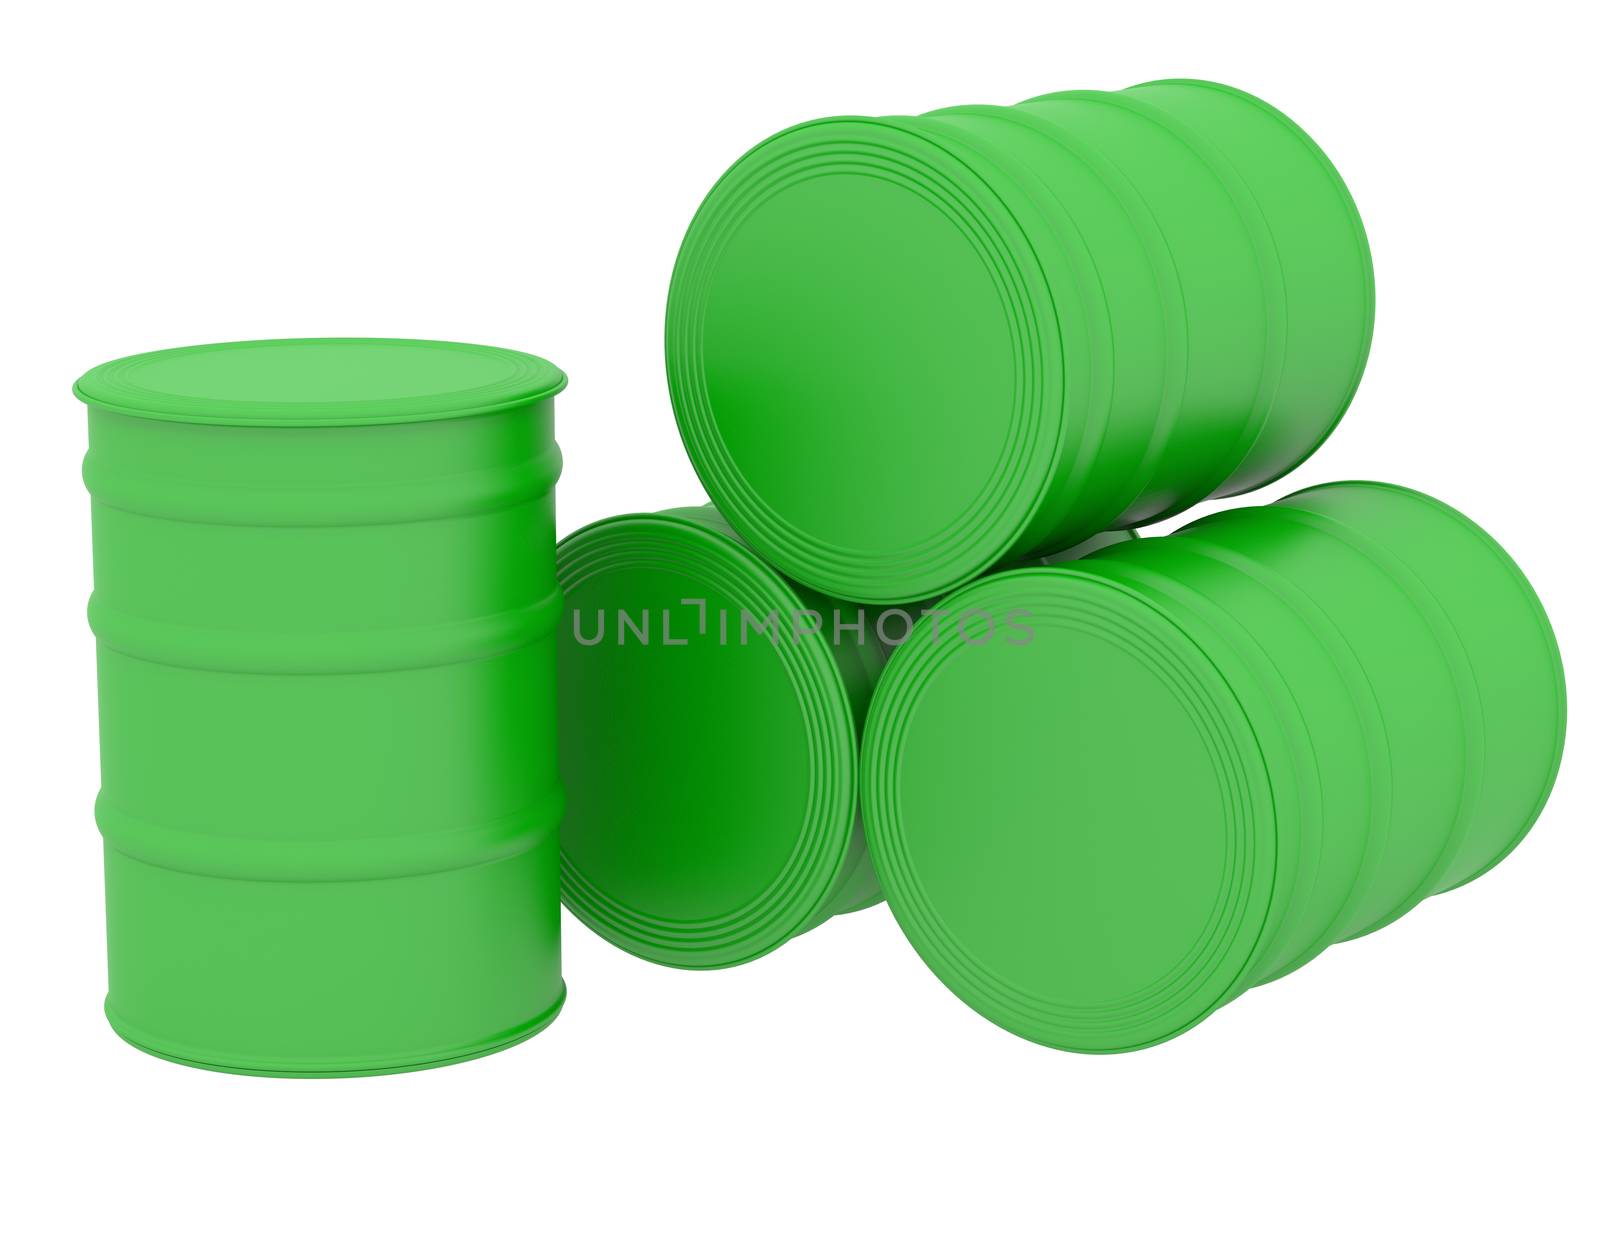 Green barrels natural fuel by cherezoff